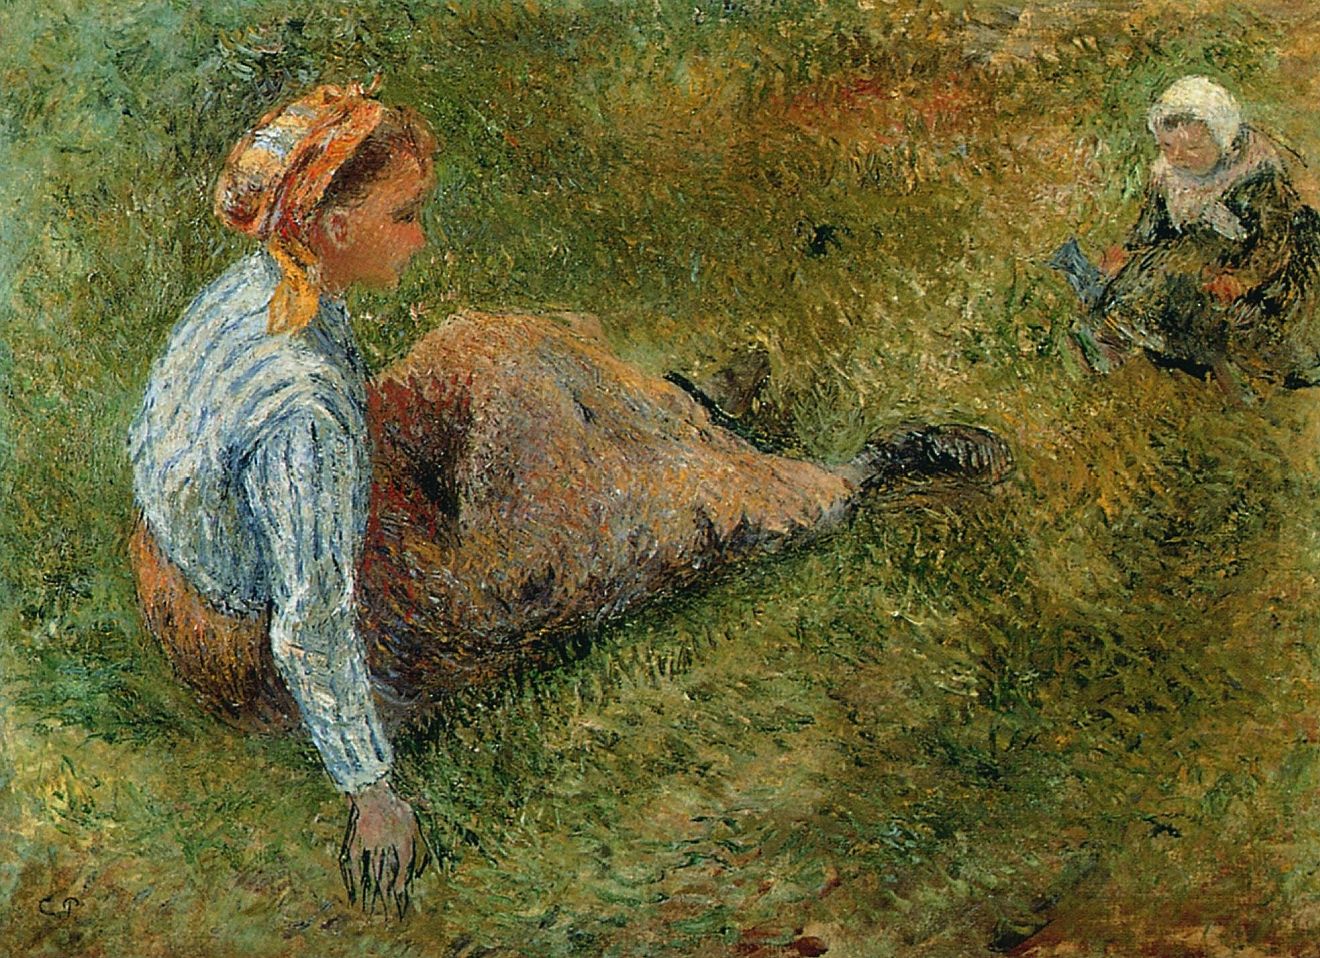 Camille+Pissarro-1830-1903 (321).jpg